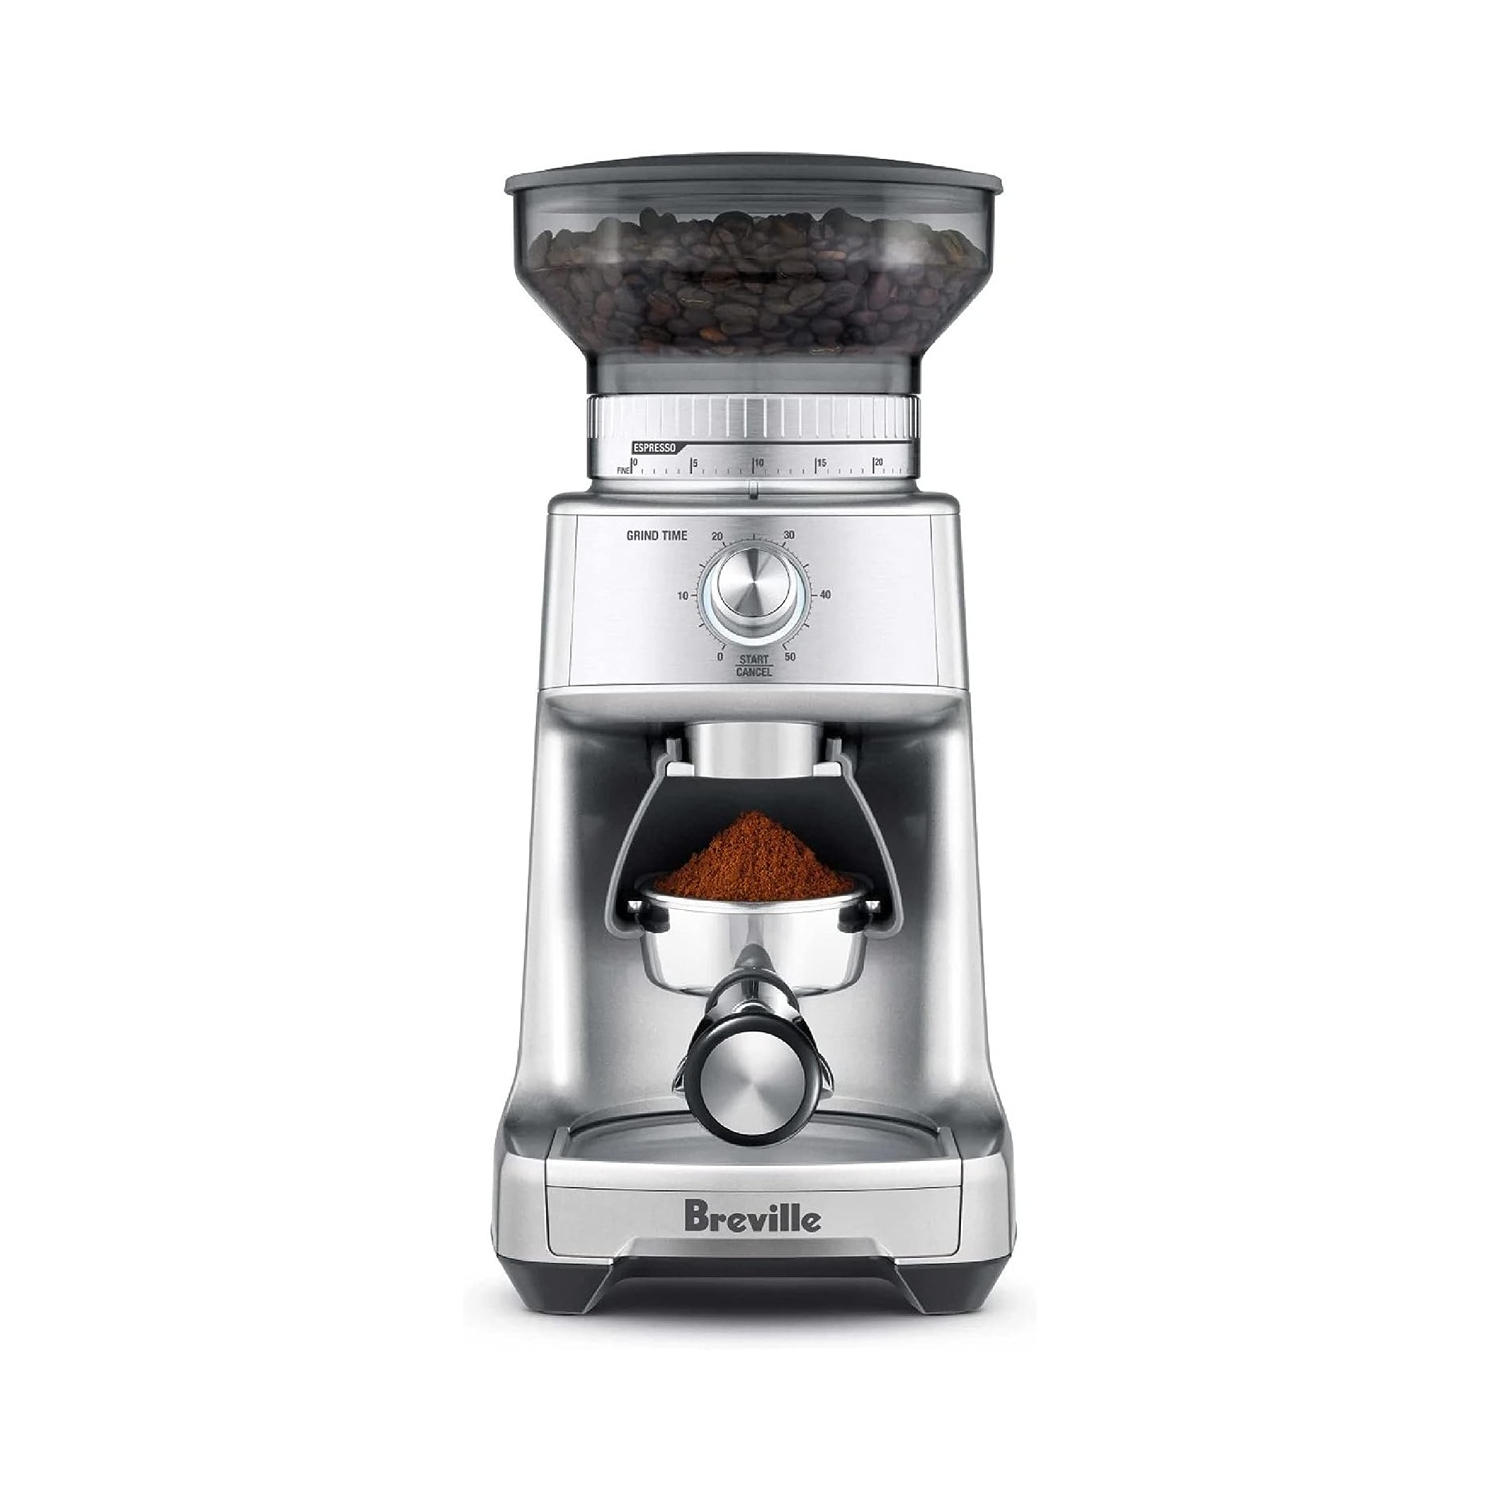 Breville 1.36kg Capacity Dose Control Pro Coffee Grinder - Silver